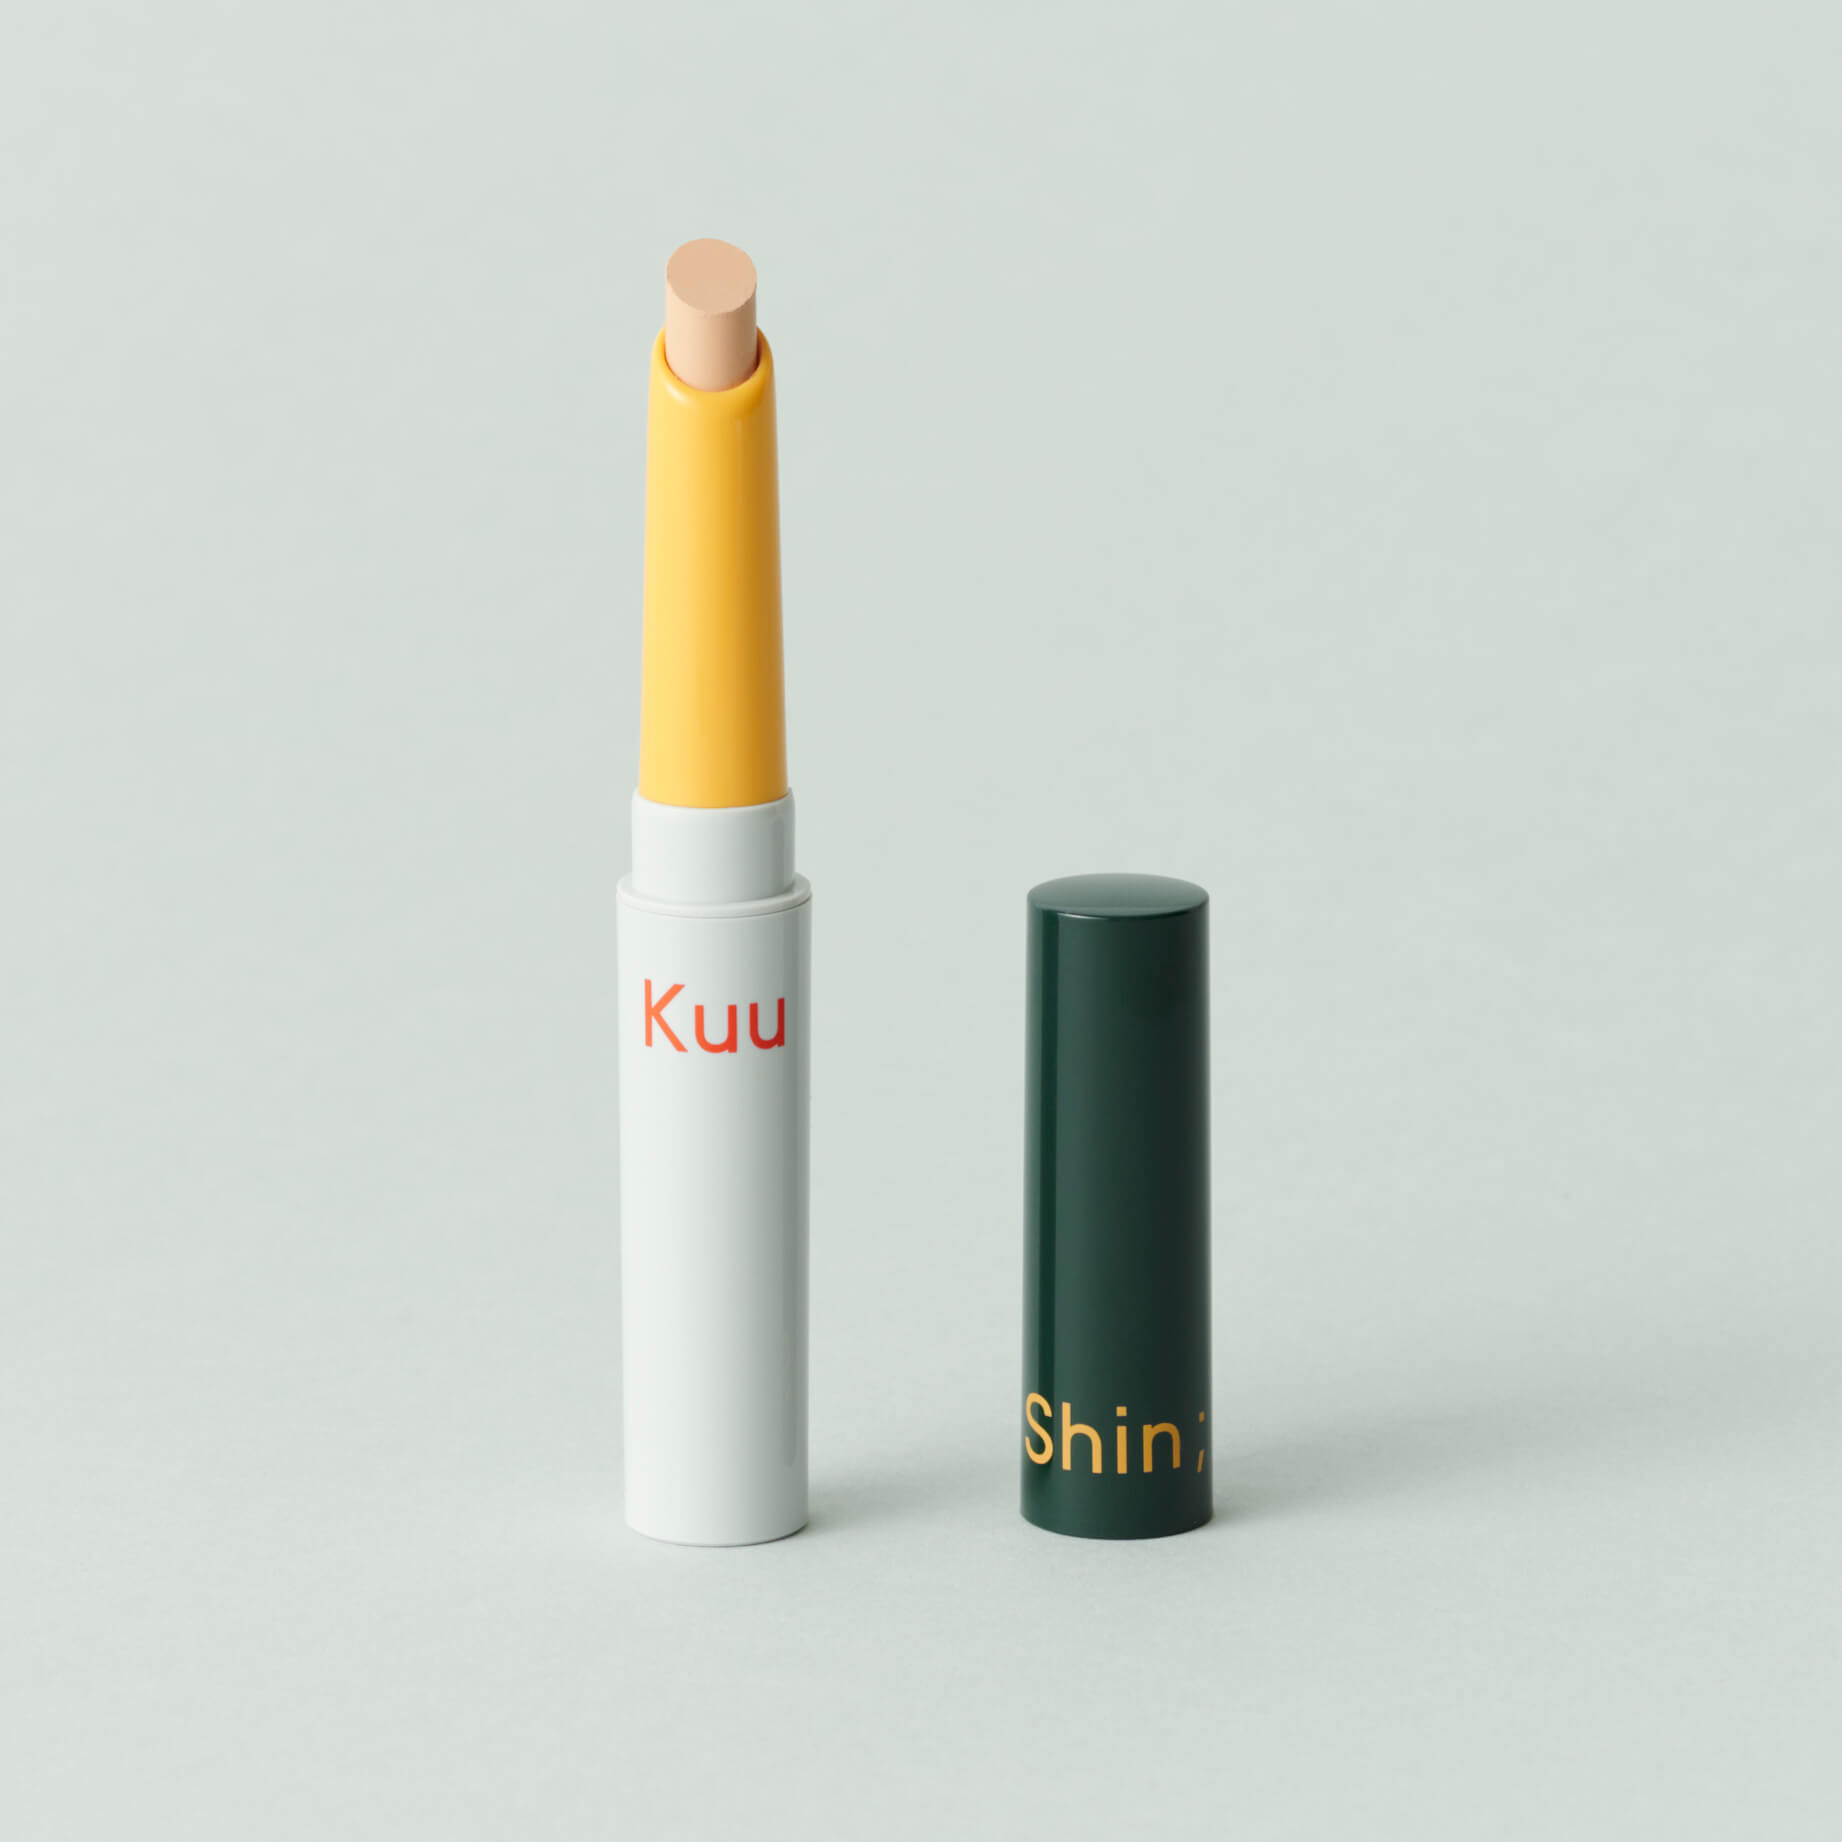 「Shin;Kuu」THE FIVE_BOXの「concealer」